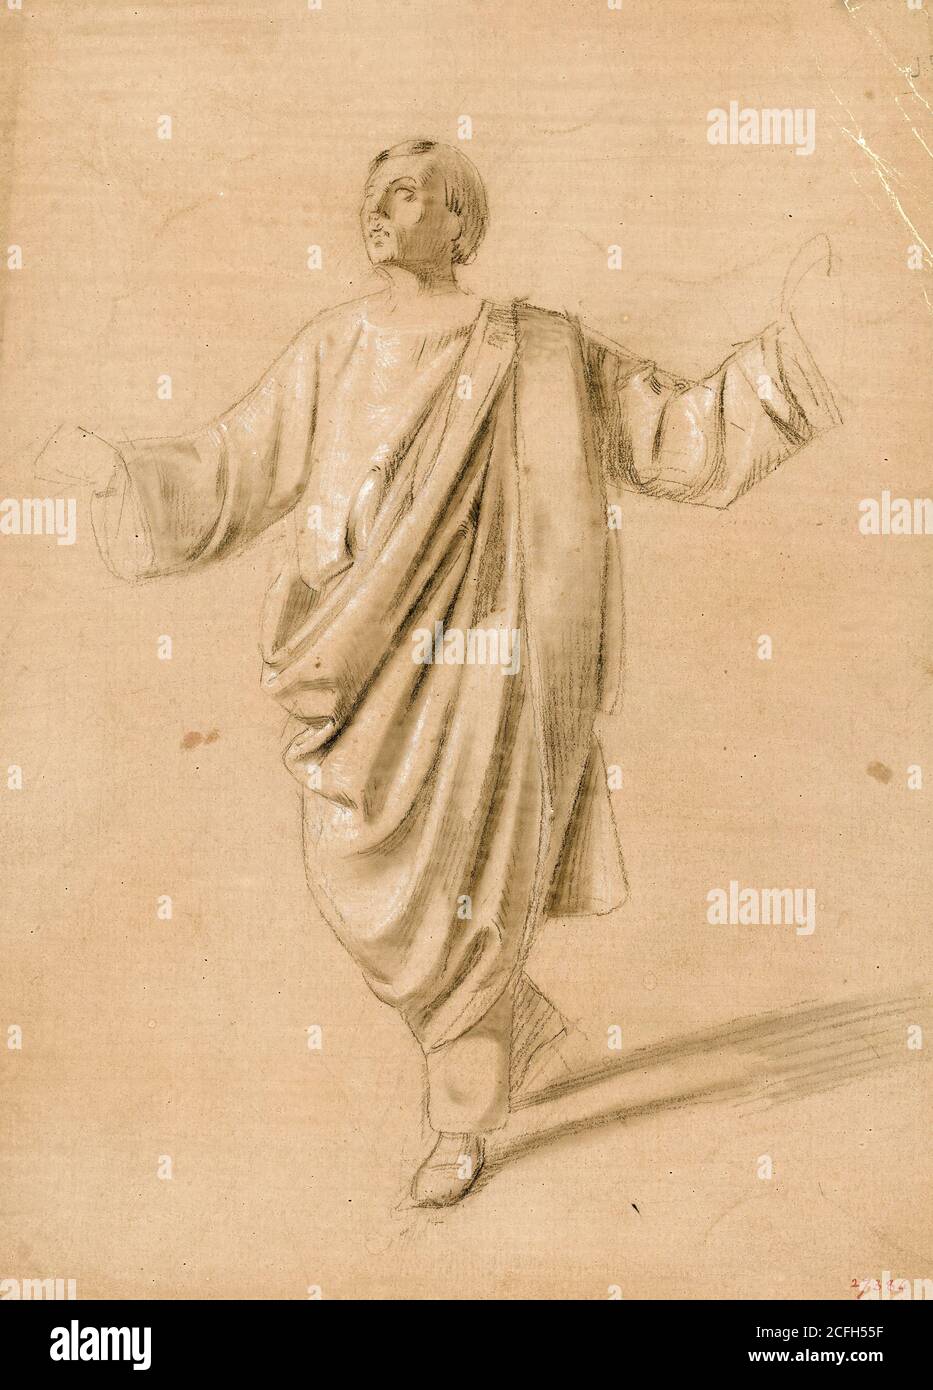 Maria Fortuny, Academic Study of a Male Figure, Circa 1856-1858, Pencil and white lead on paper, Museu Nacional d'Art de Catalunya, Barcelona, Spain. Stock Photo